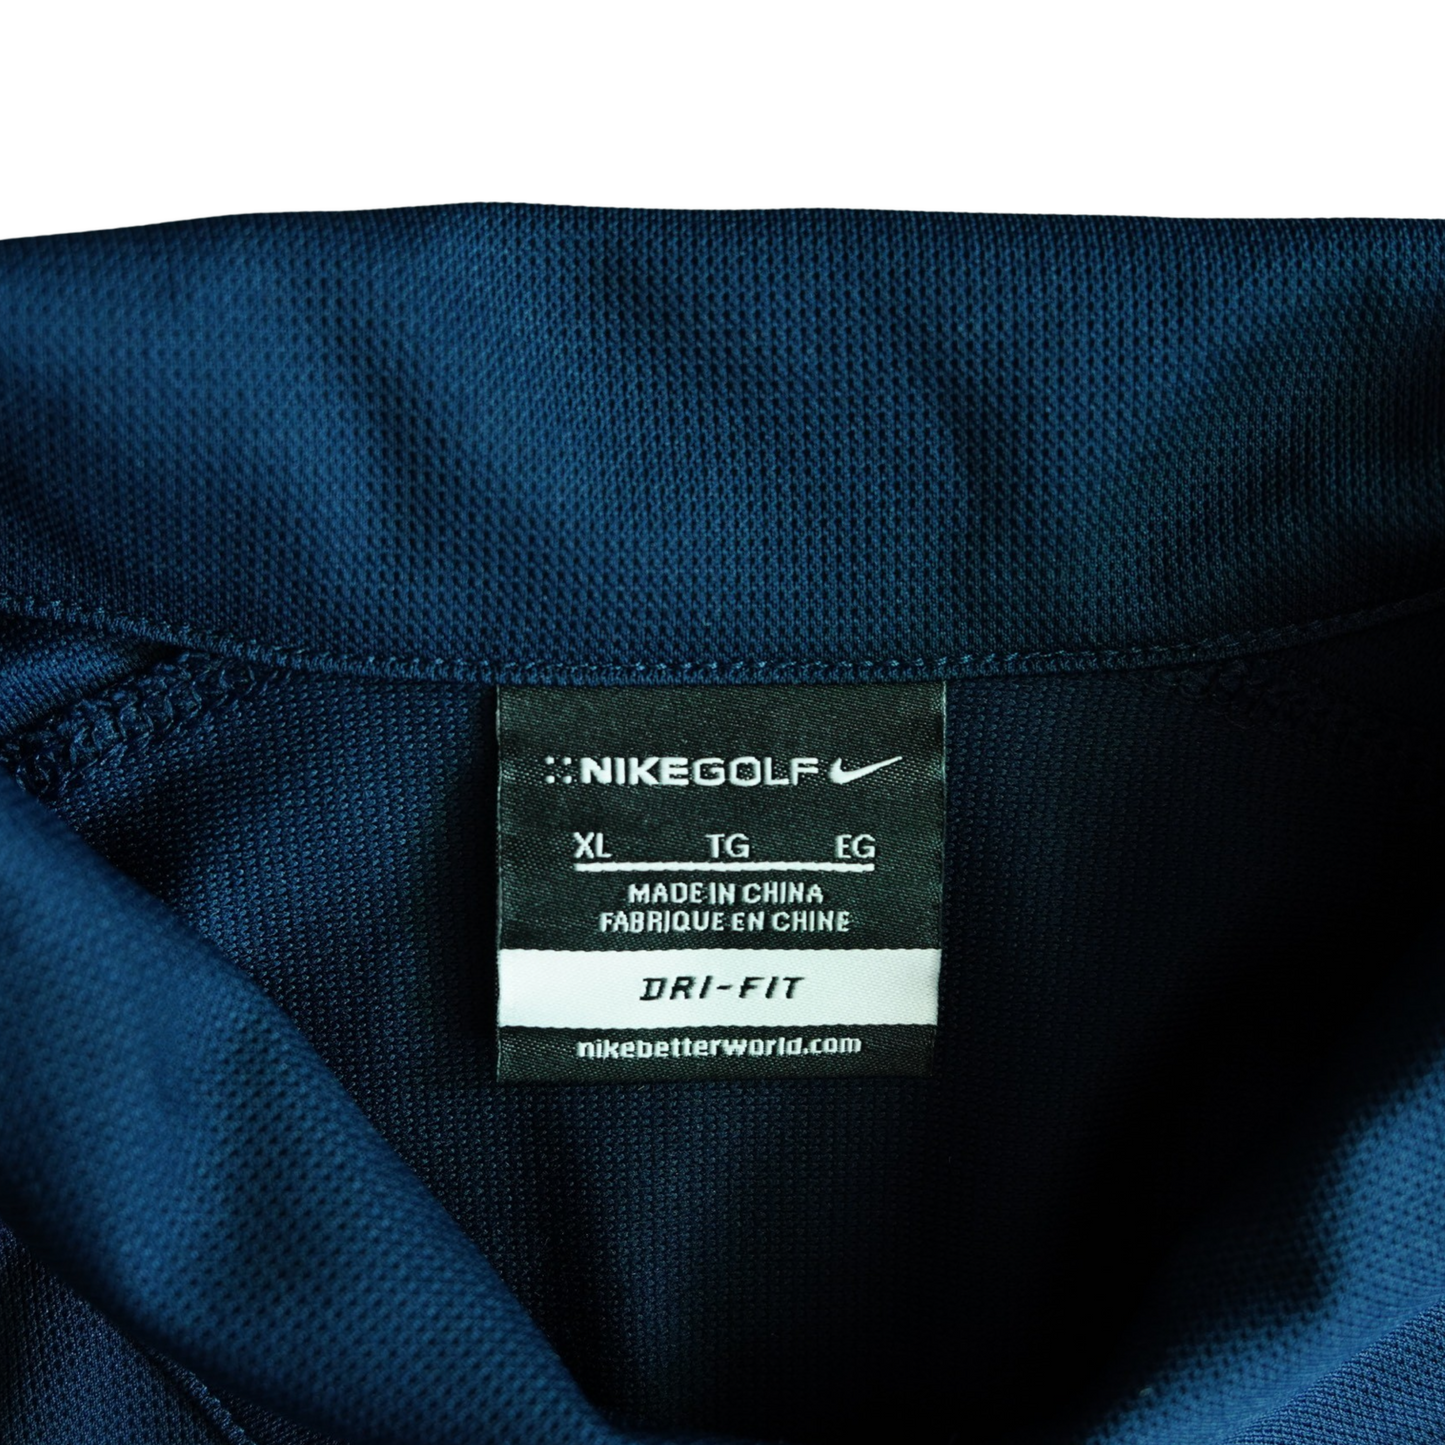 Nike Golf DRI-FIT x Benjamin Moore Polo Shirt